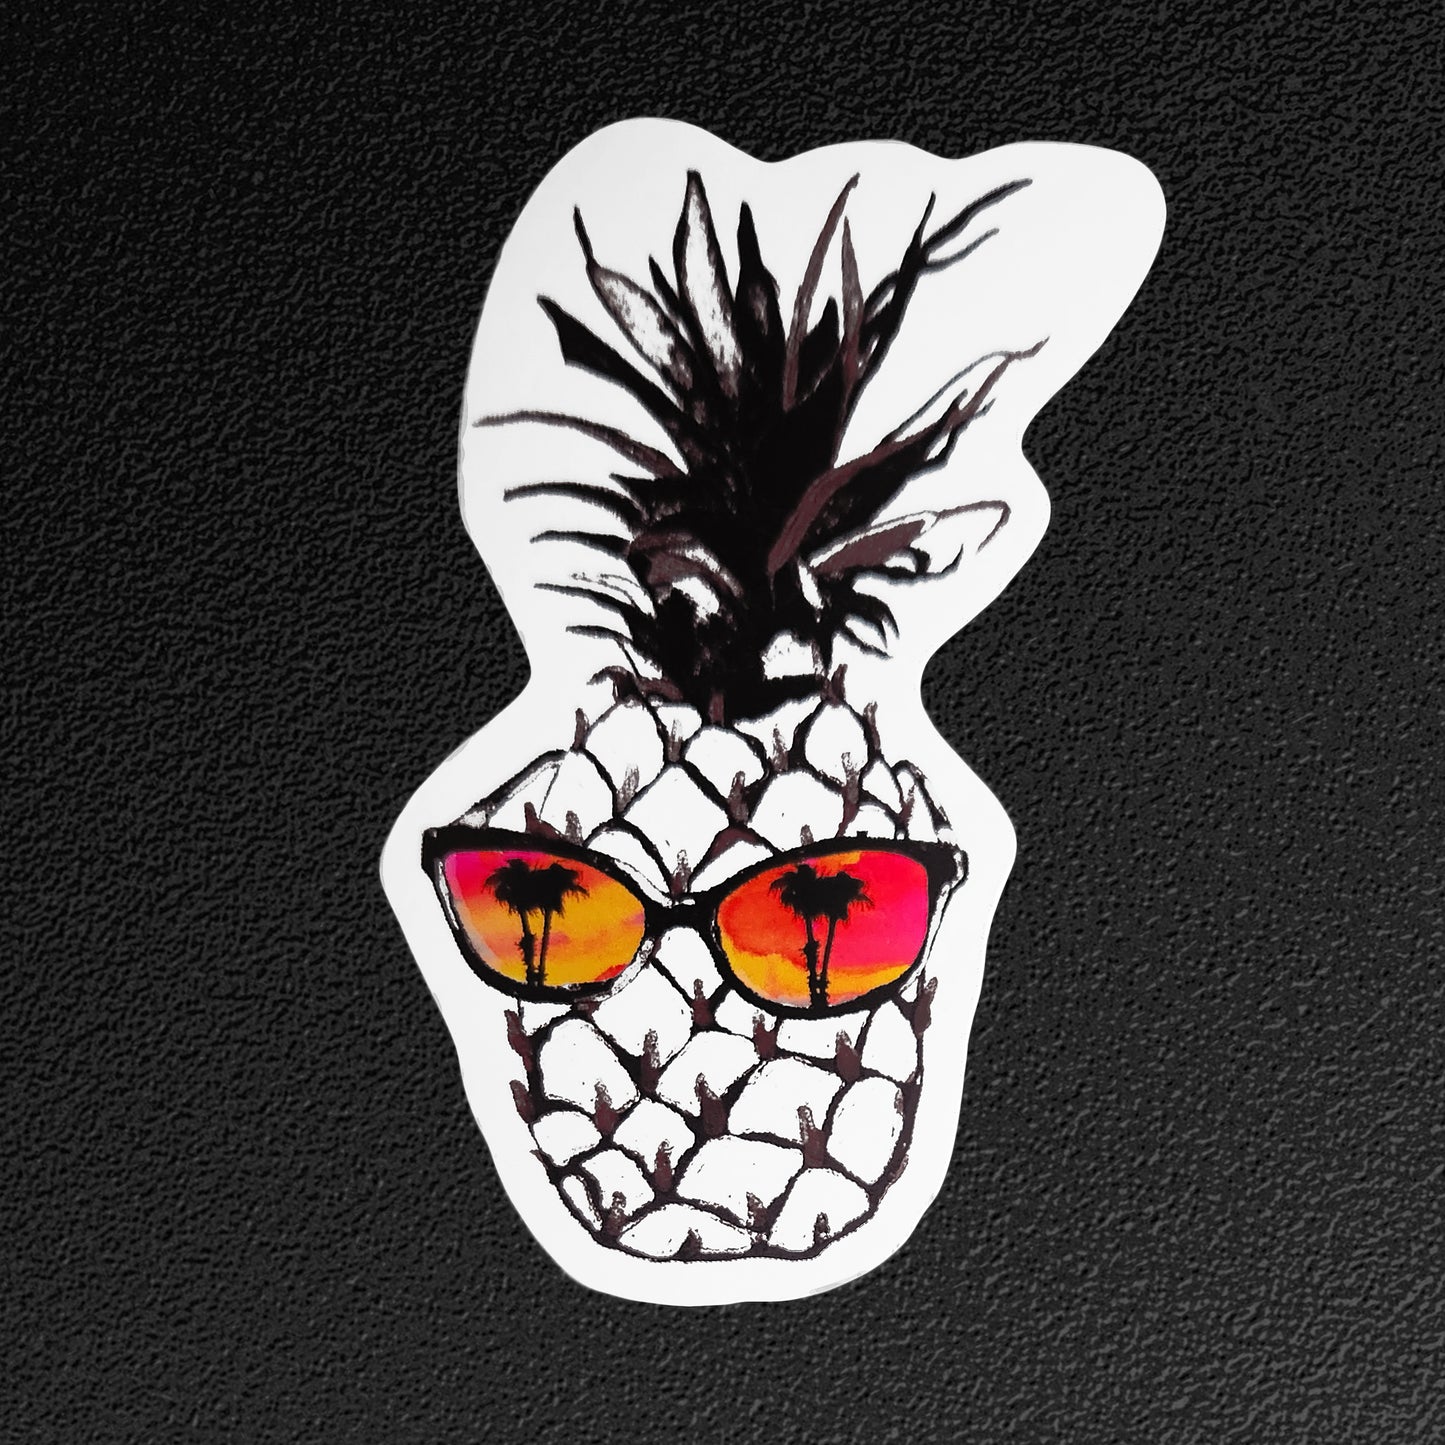 Hot Pineapple in Orange Vinyl Sticker/Decal